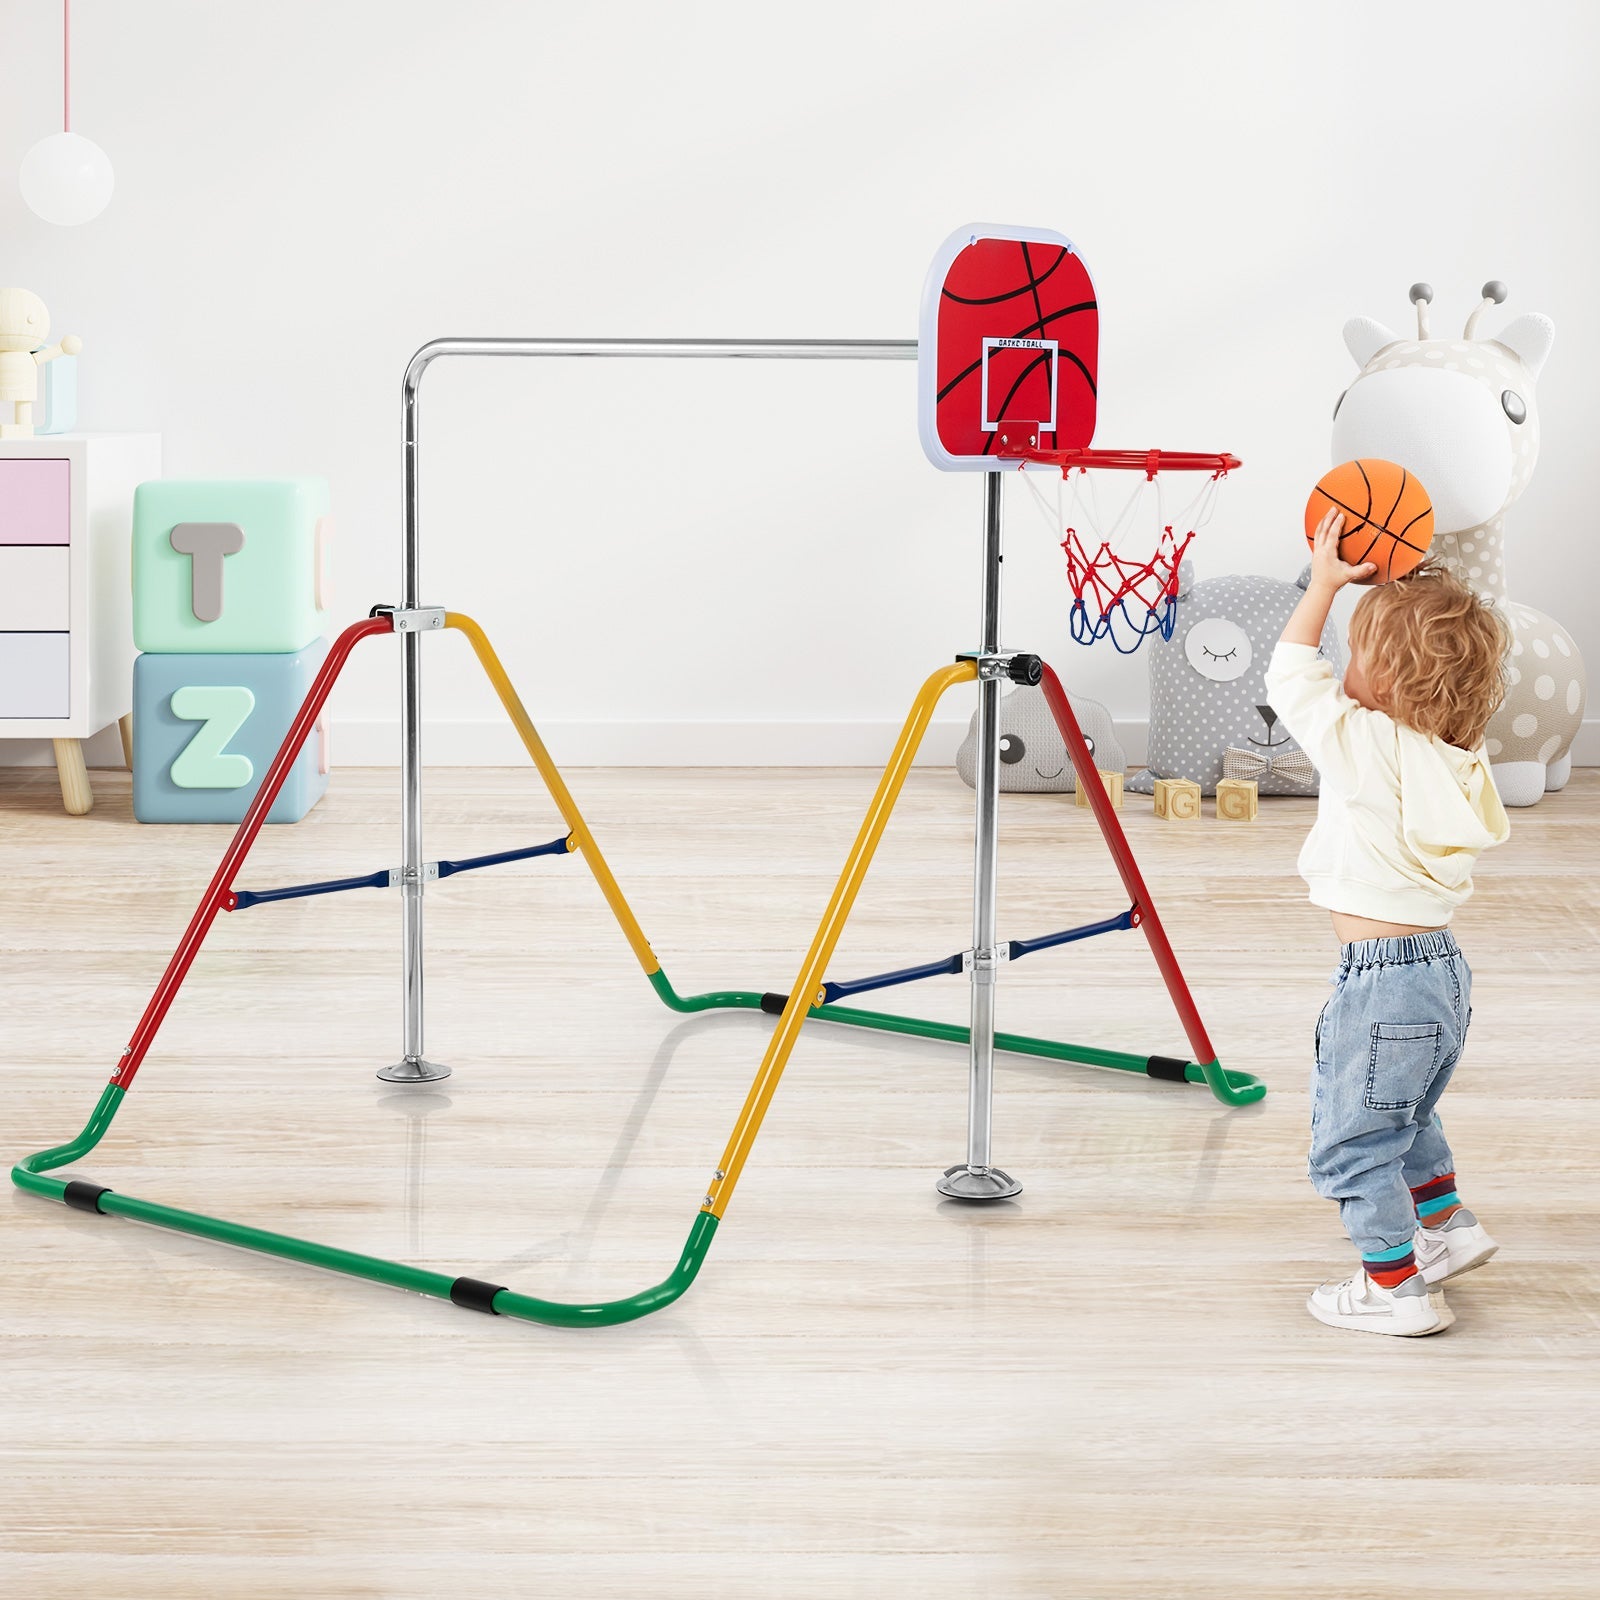 Foldable Horizontal Gymnastics Bar: Junior Training with Basketball Hoop